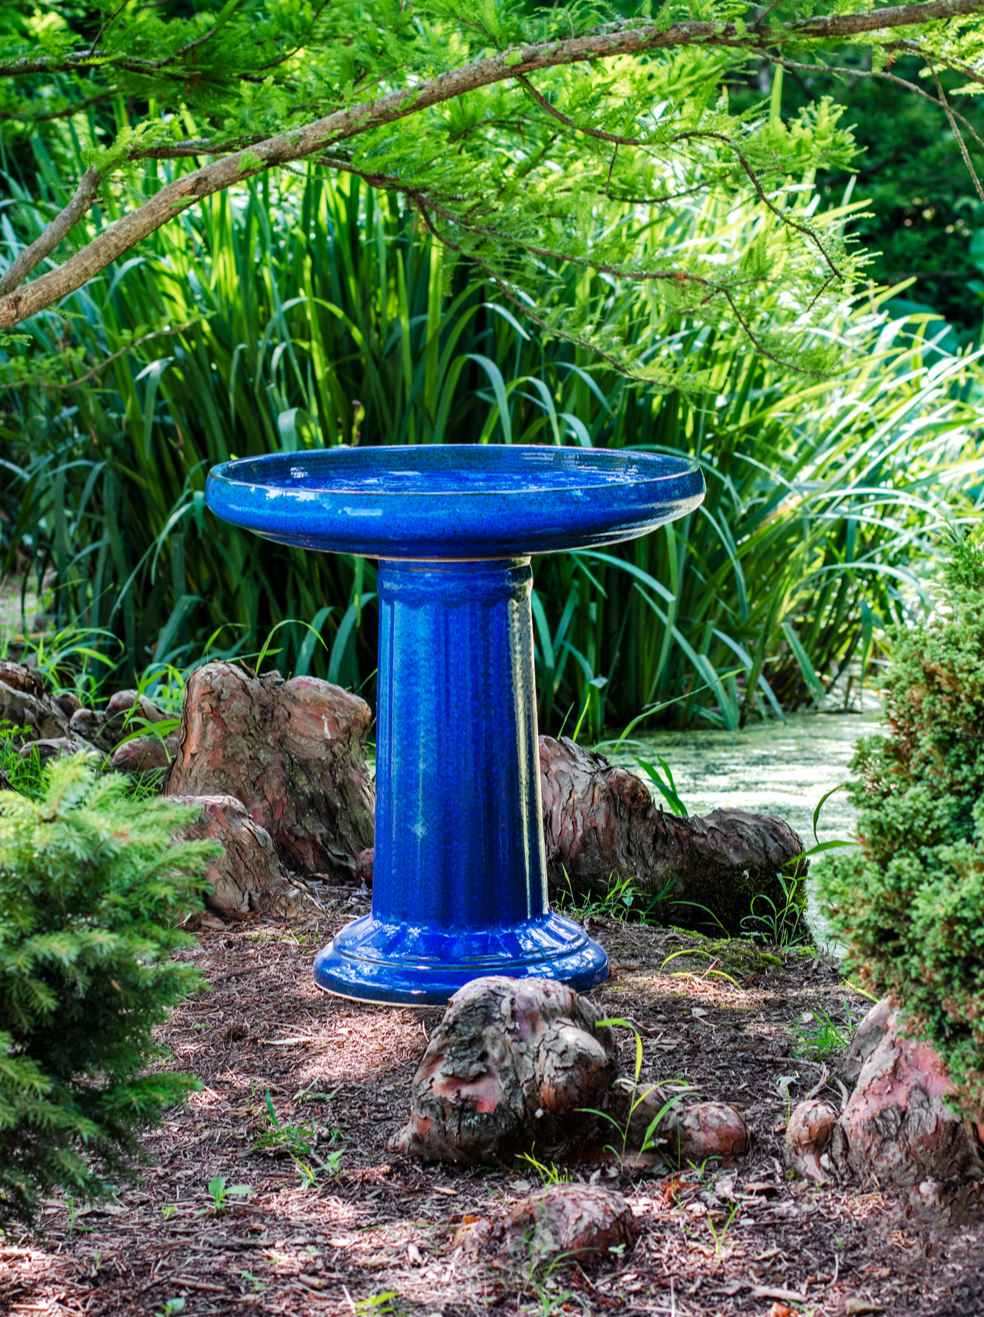 Ceramic blue birdbath set with modern clean column design in a landscaped garden setting